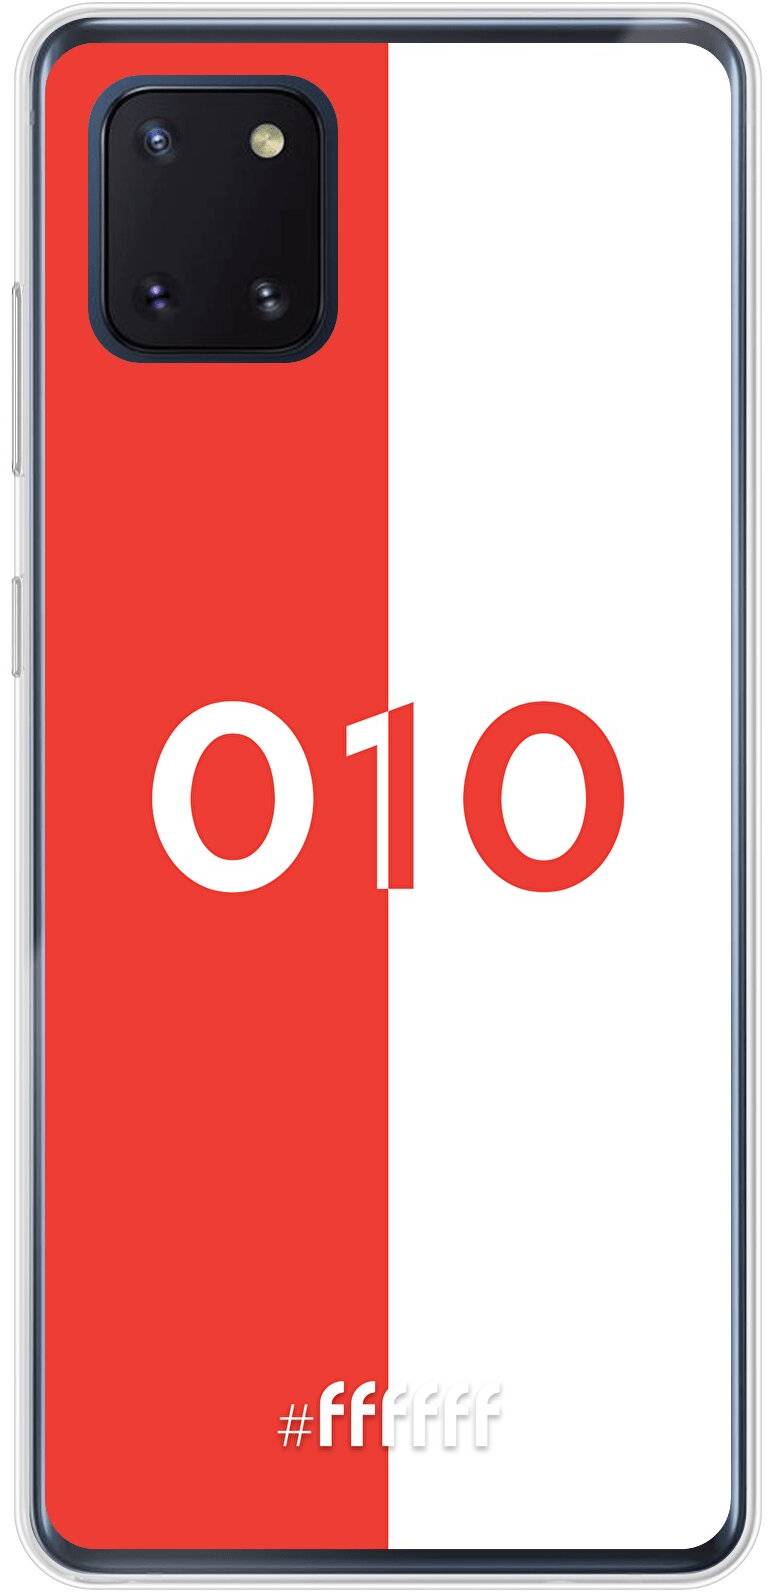 Feyenoord - 010 Galaxy Note 10 Lite